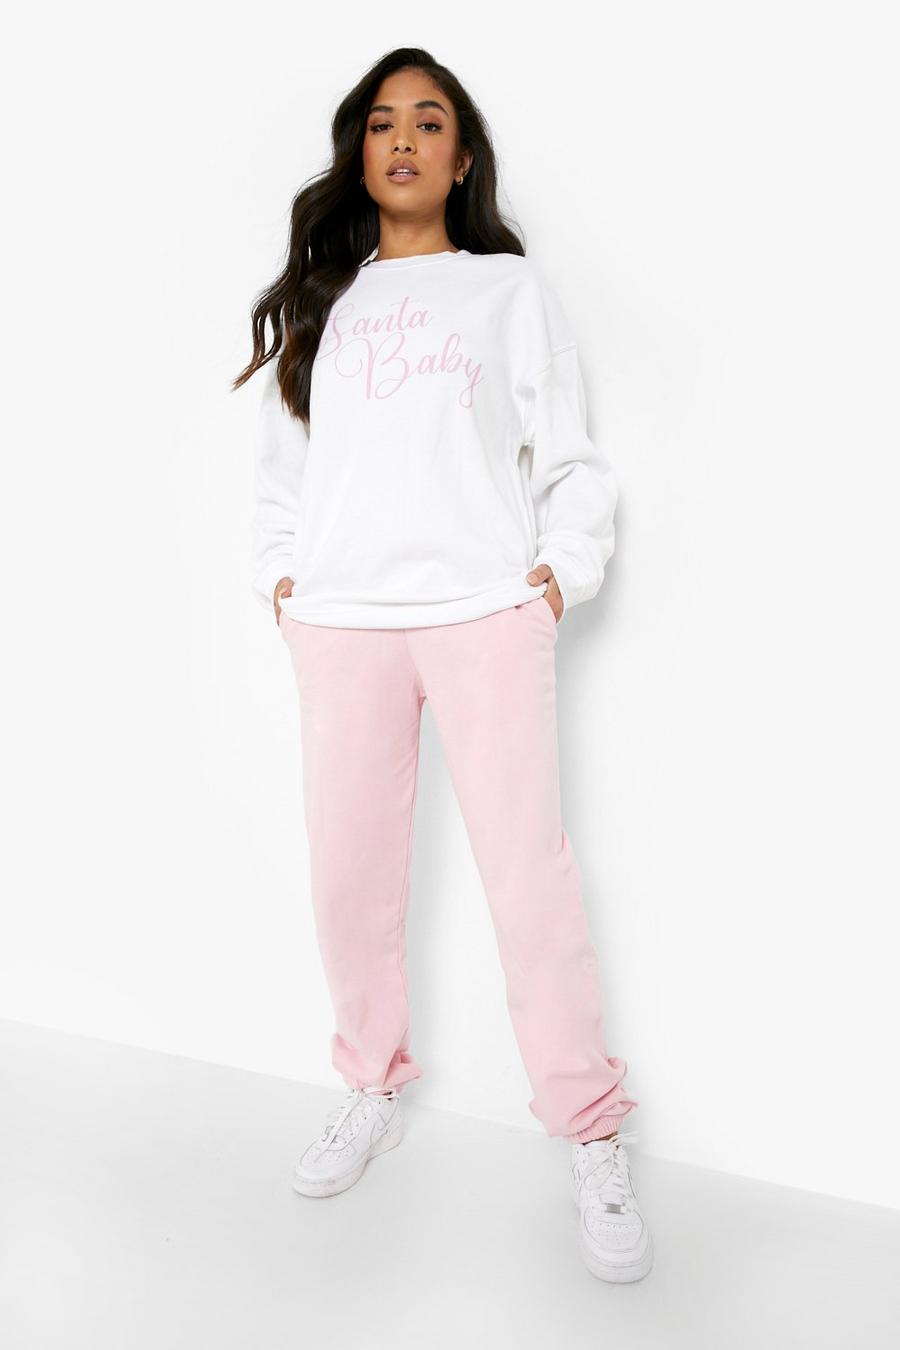 Petite Sweatshirt-Trainingsanzug mit Santa Baby Slogan, Baby pink rosa